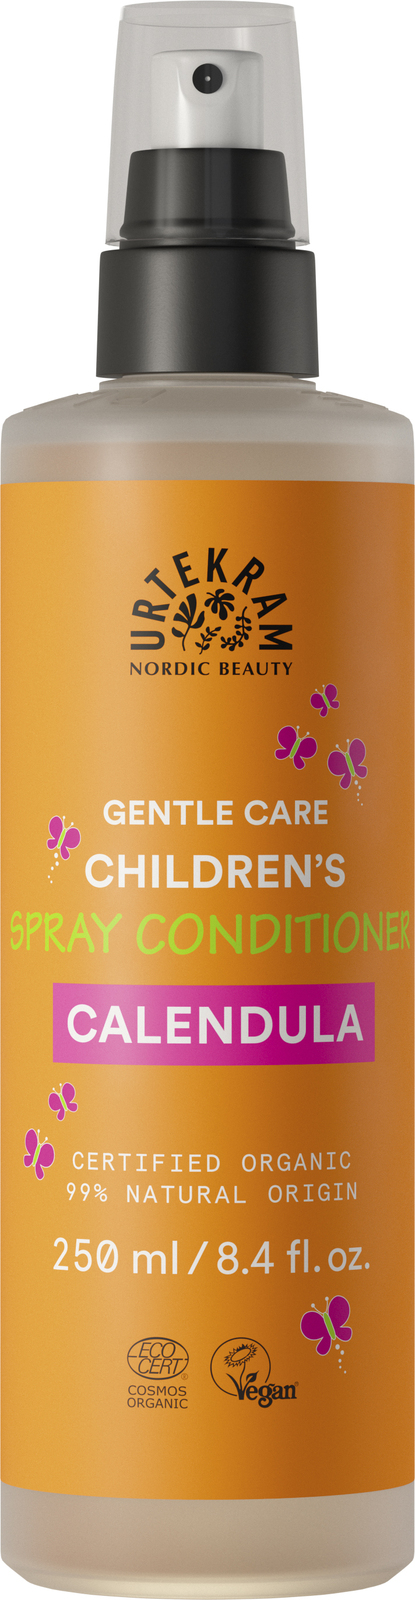 Urtekram Calendula Childrens Spray Conditioner kopen